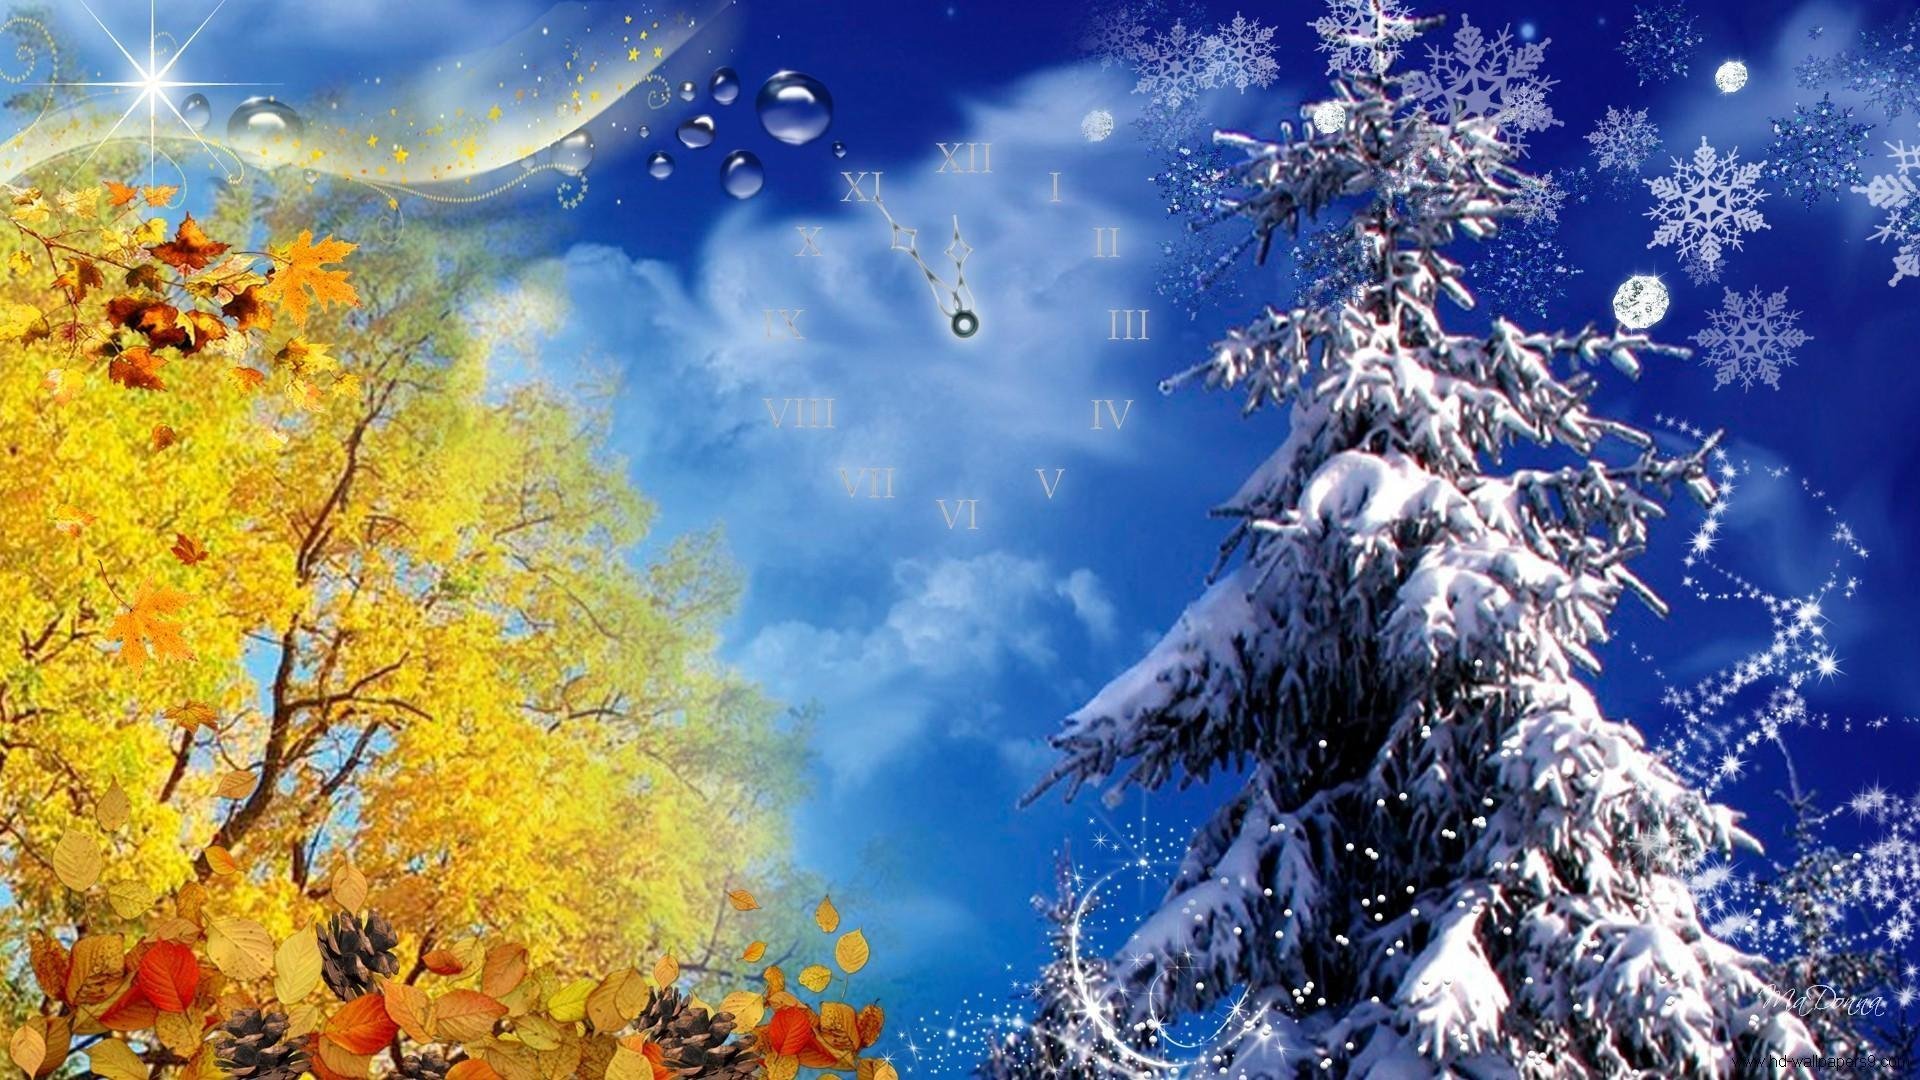 Обои времена года. Осень зима. Зимний фон. Пейзаж времена года. Фон осень зима.